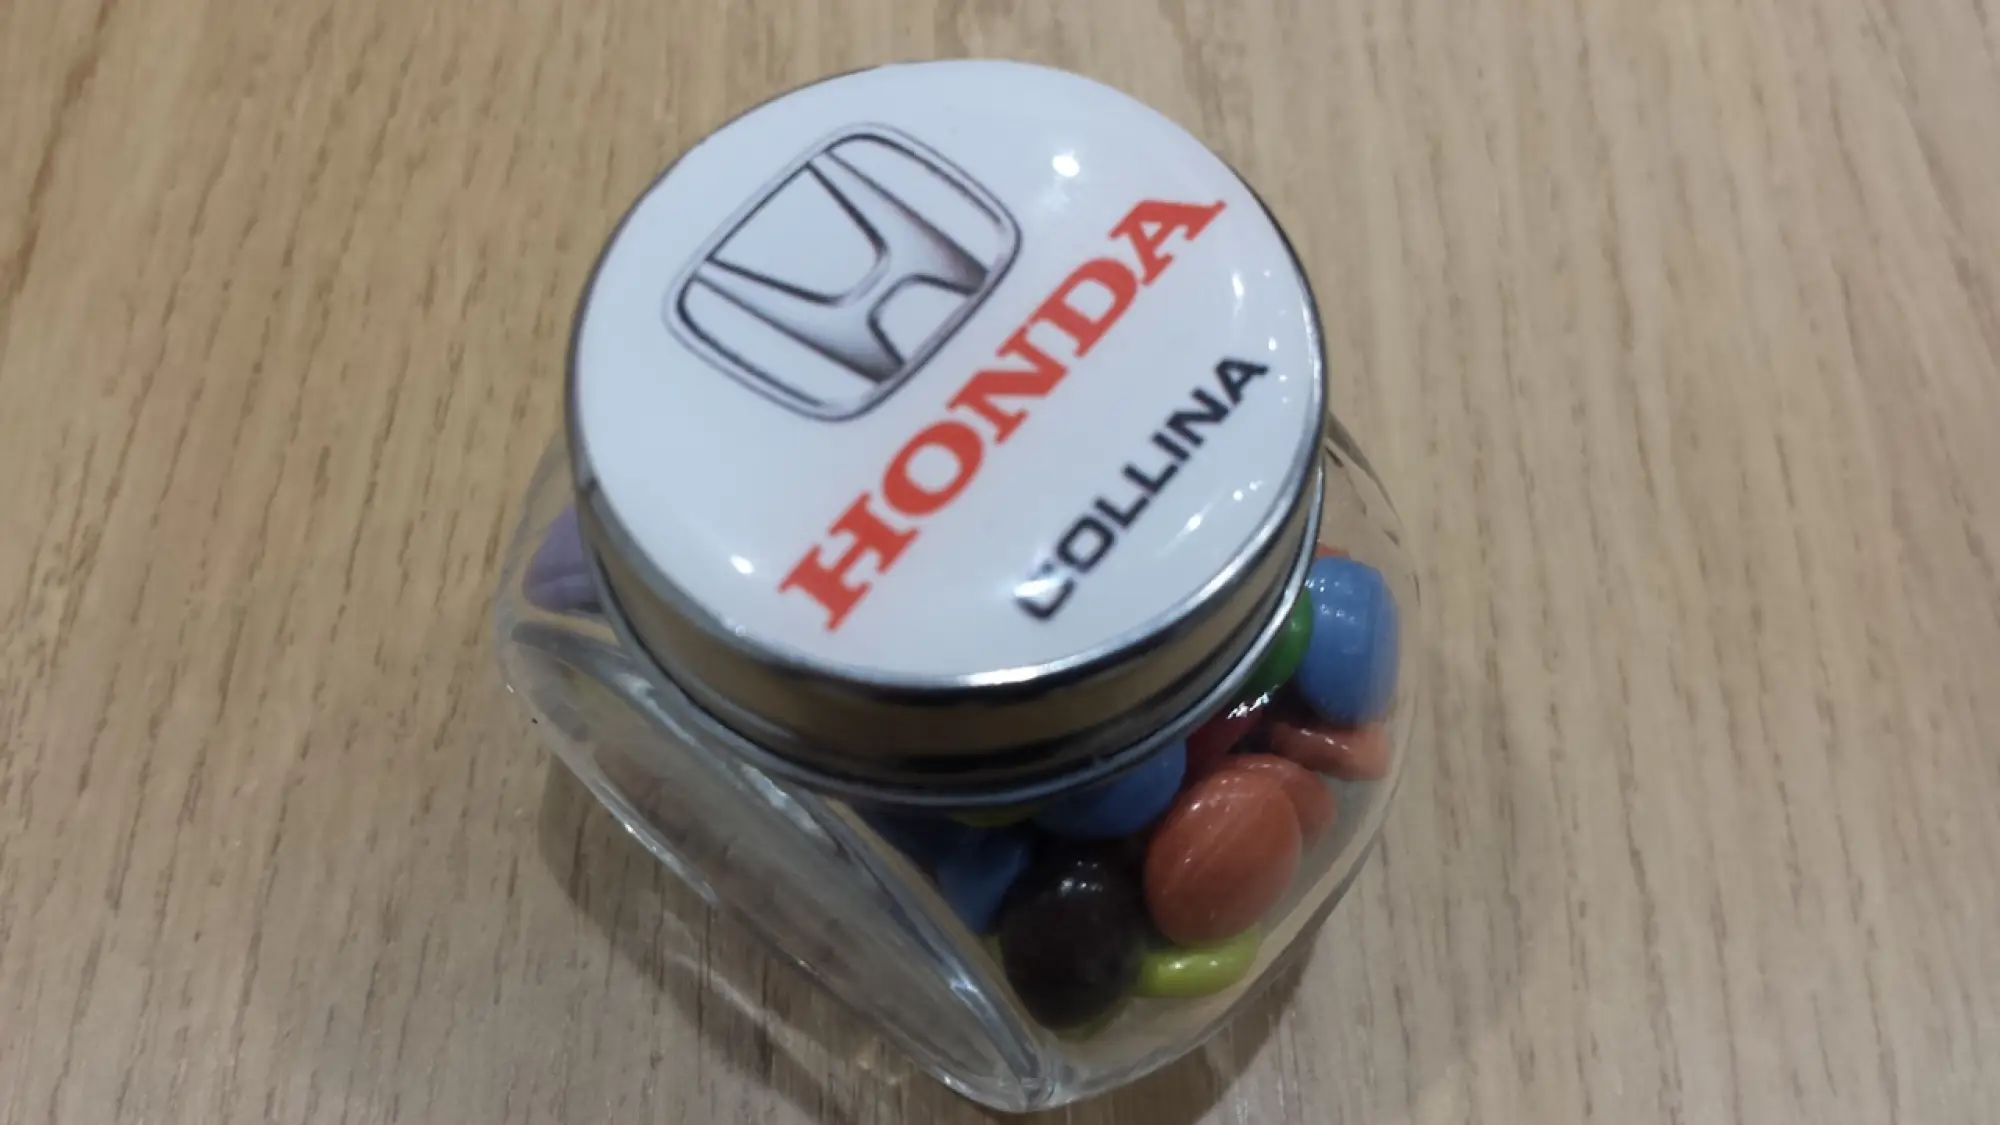 Honda - Collina Auto - 20